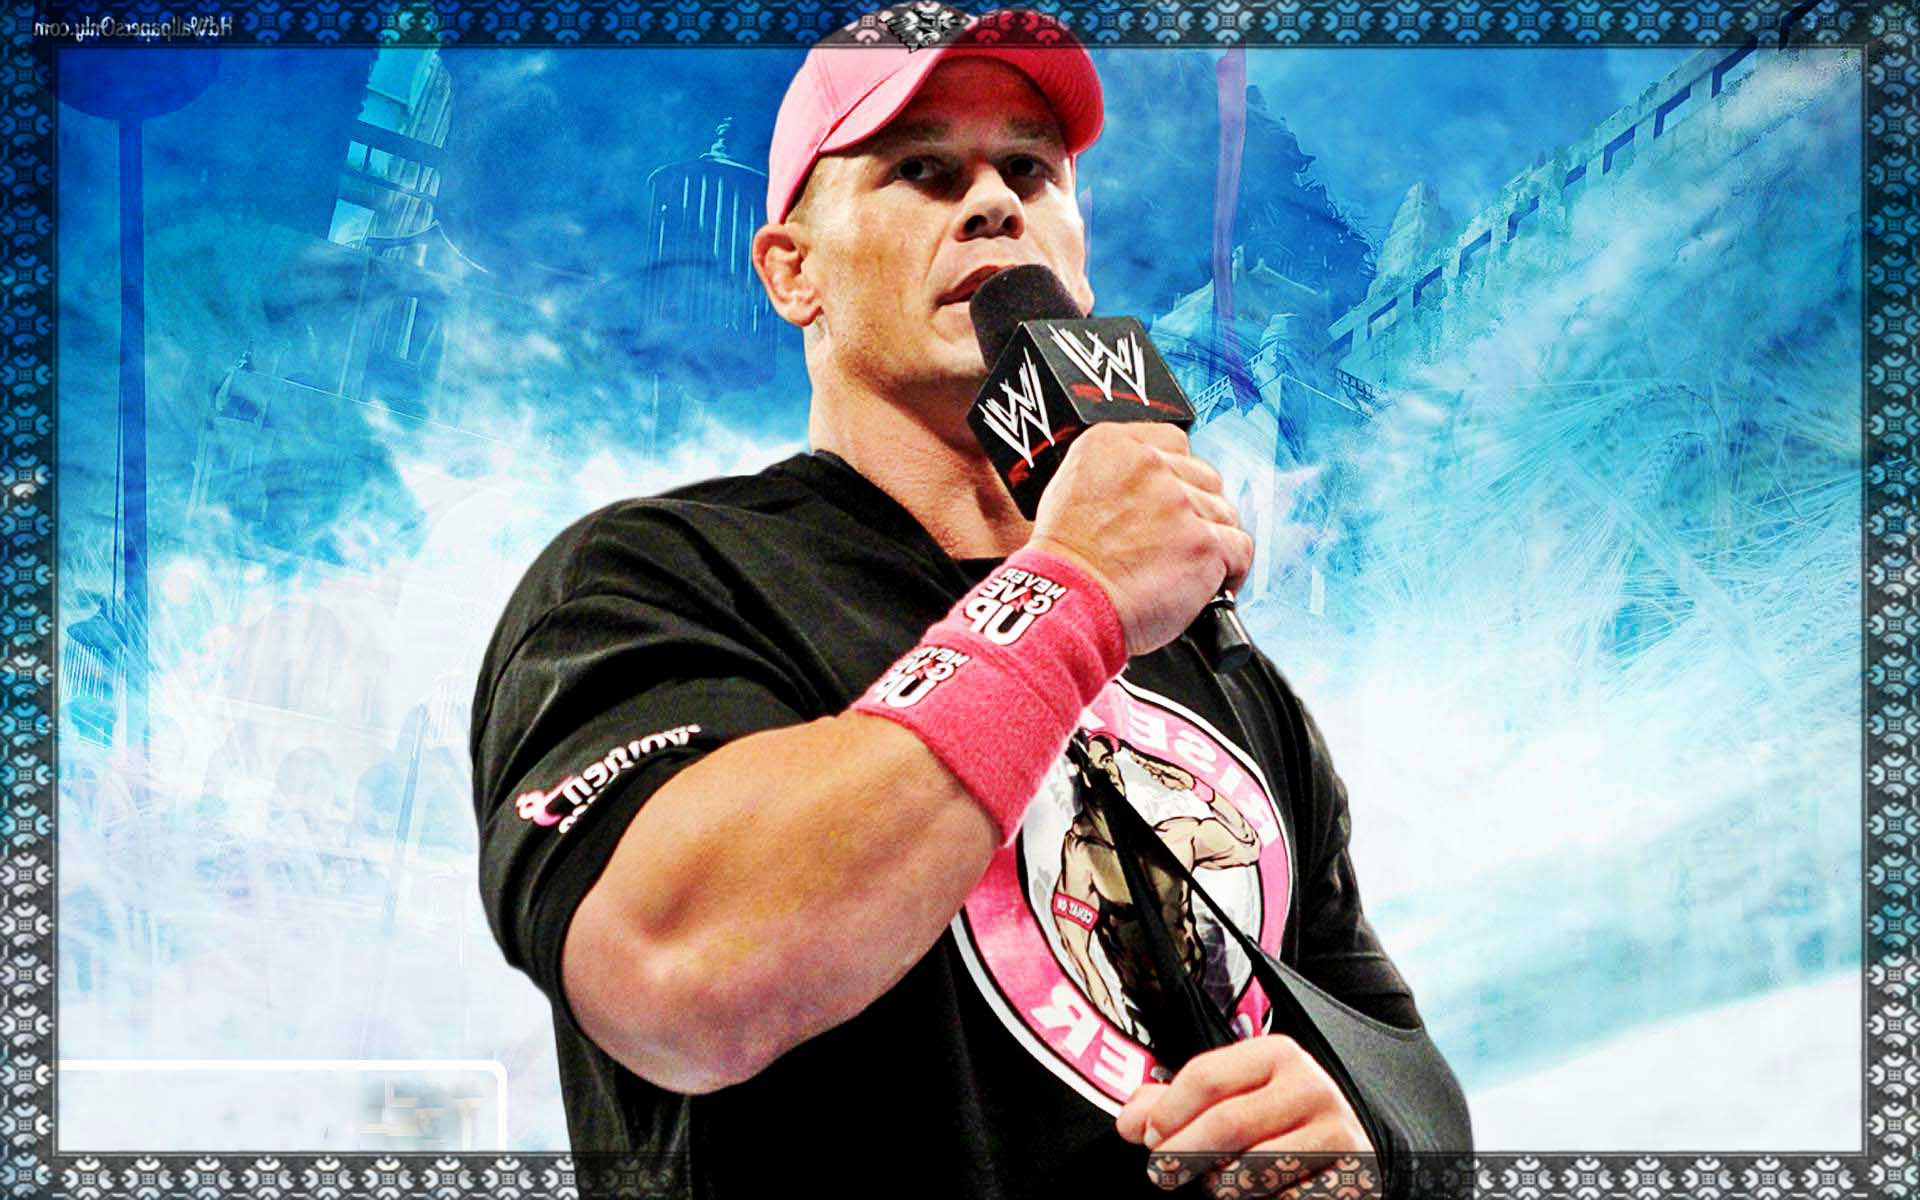 John Cena HD Wallpaper